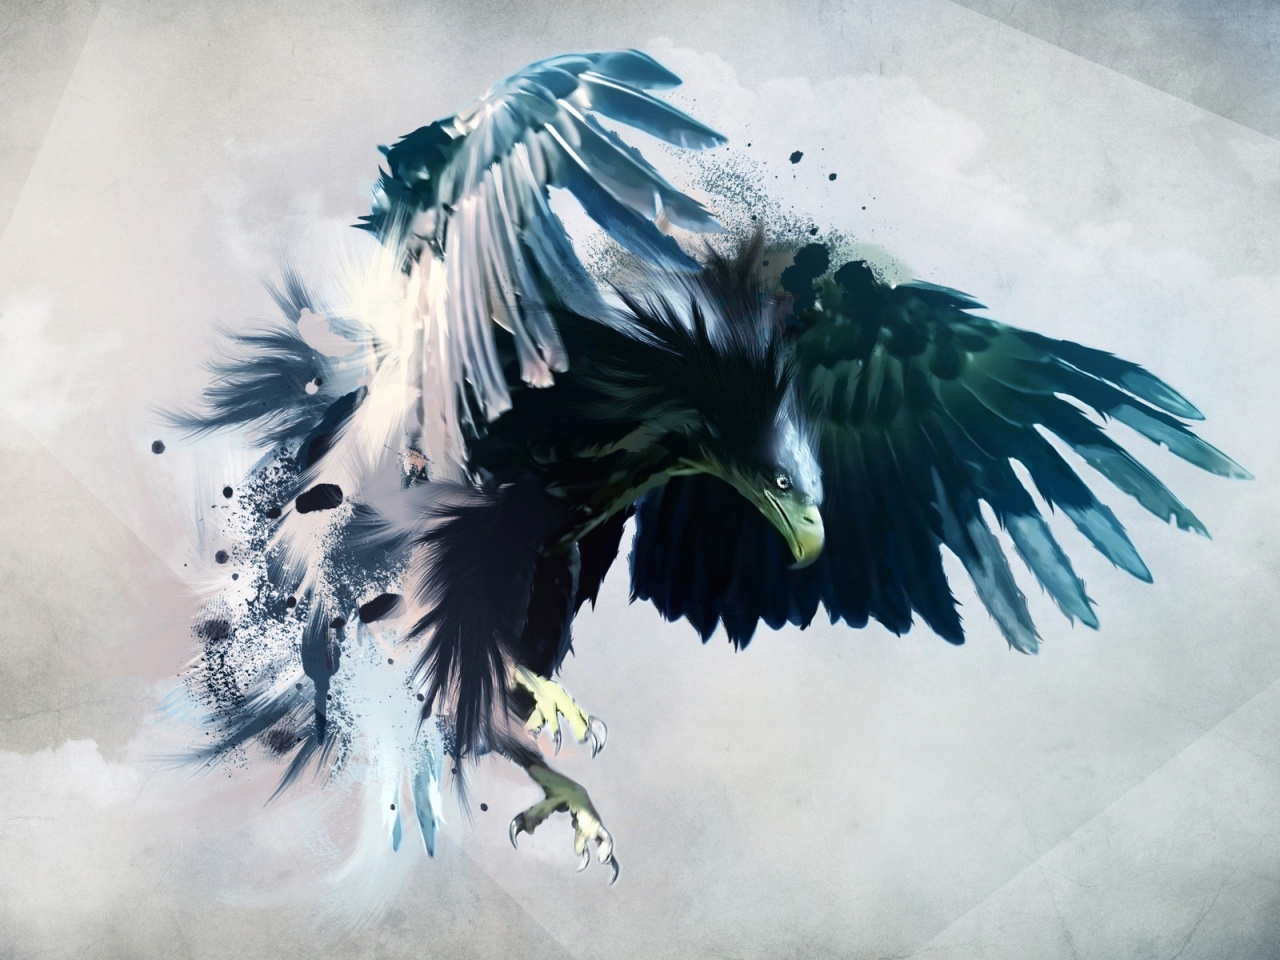 Digital Eagle for 1280 x 960 resolution